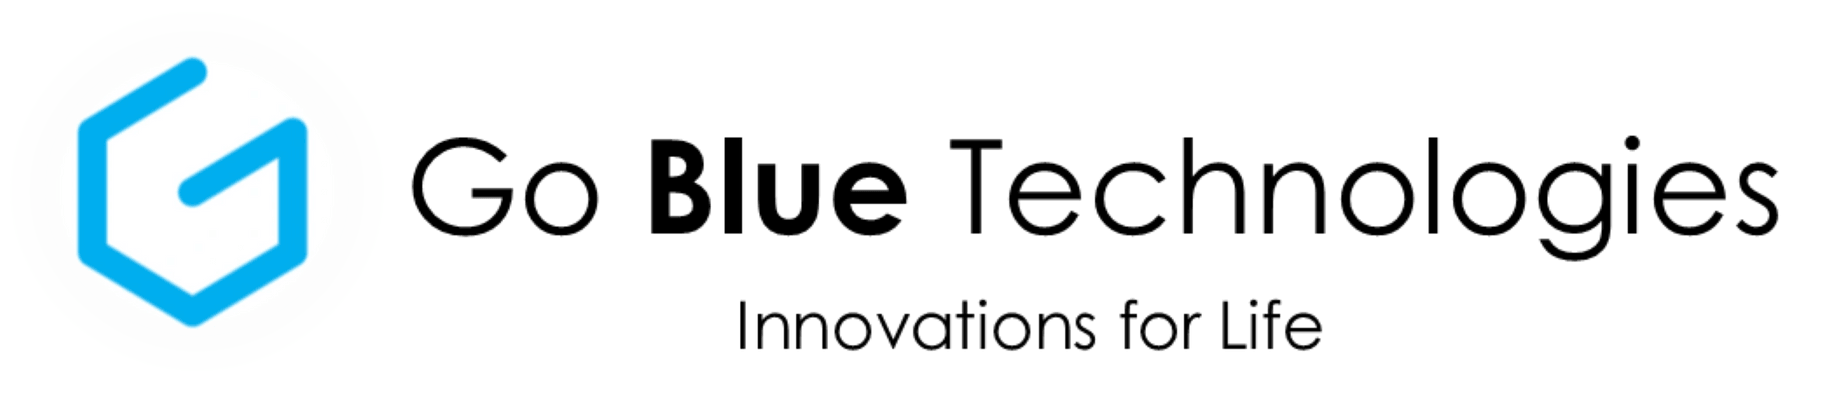 Go blue Technologies Ltd.